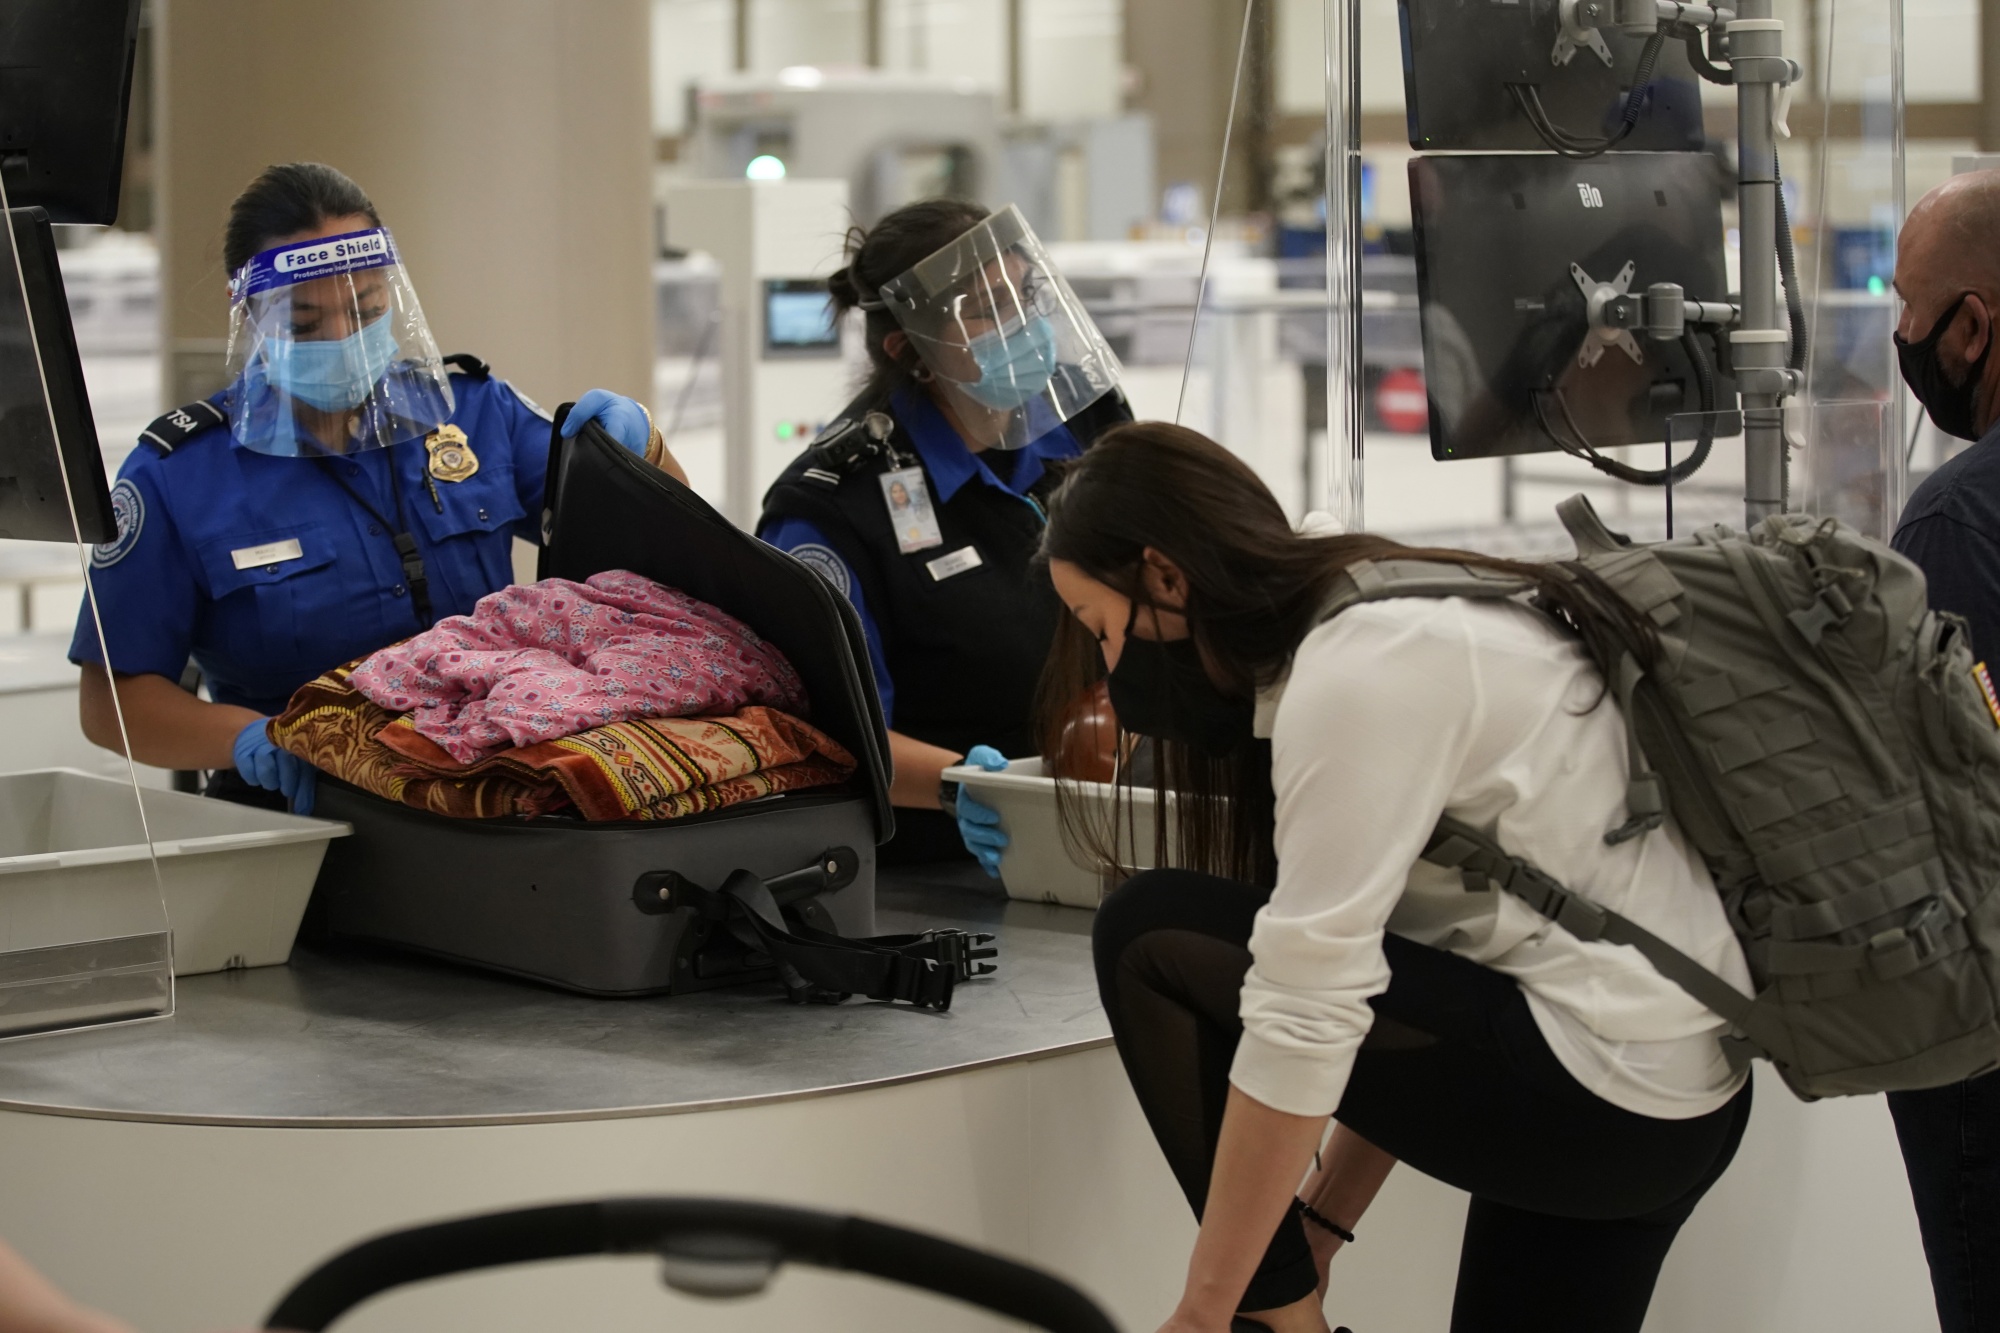 Miami airport to close terminal early as TSA screener absences rise